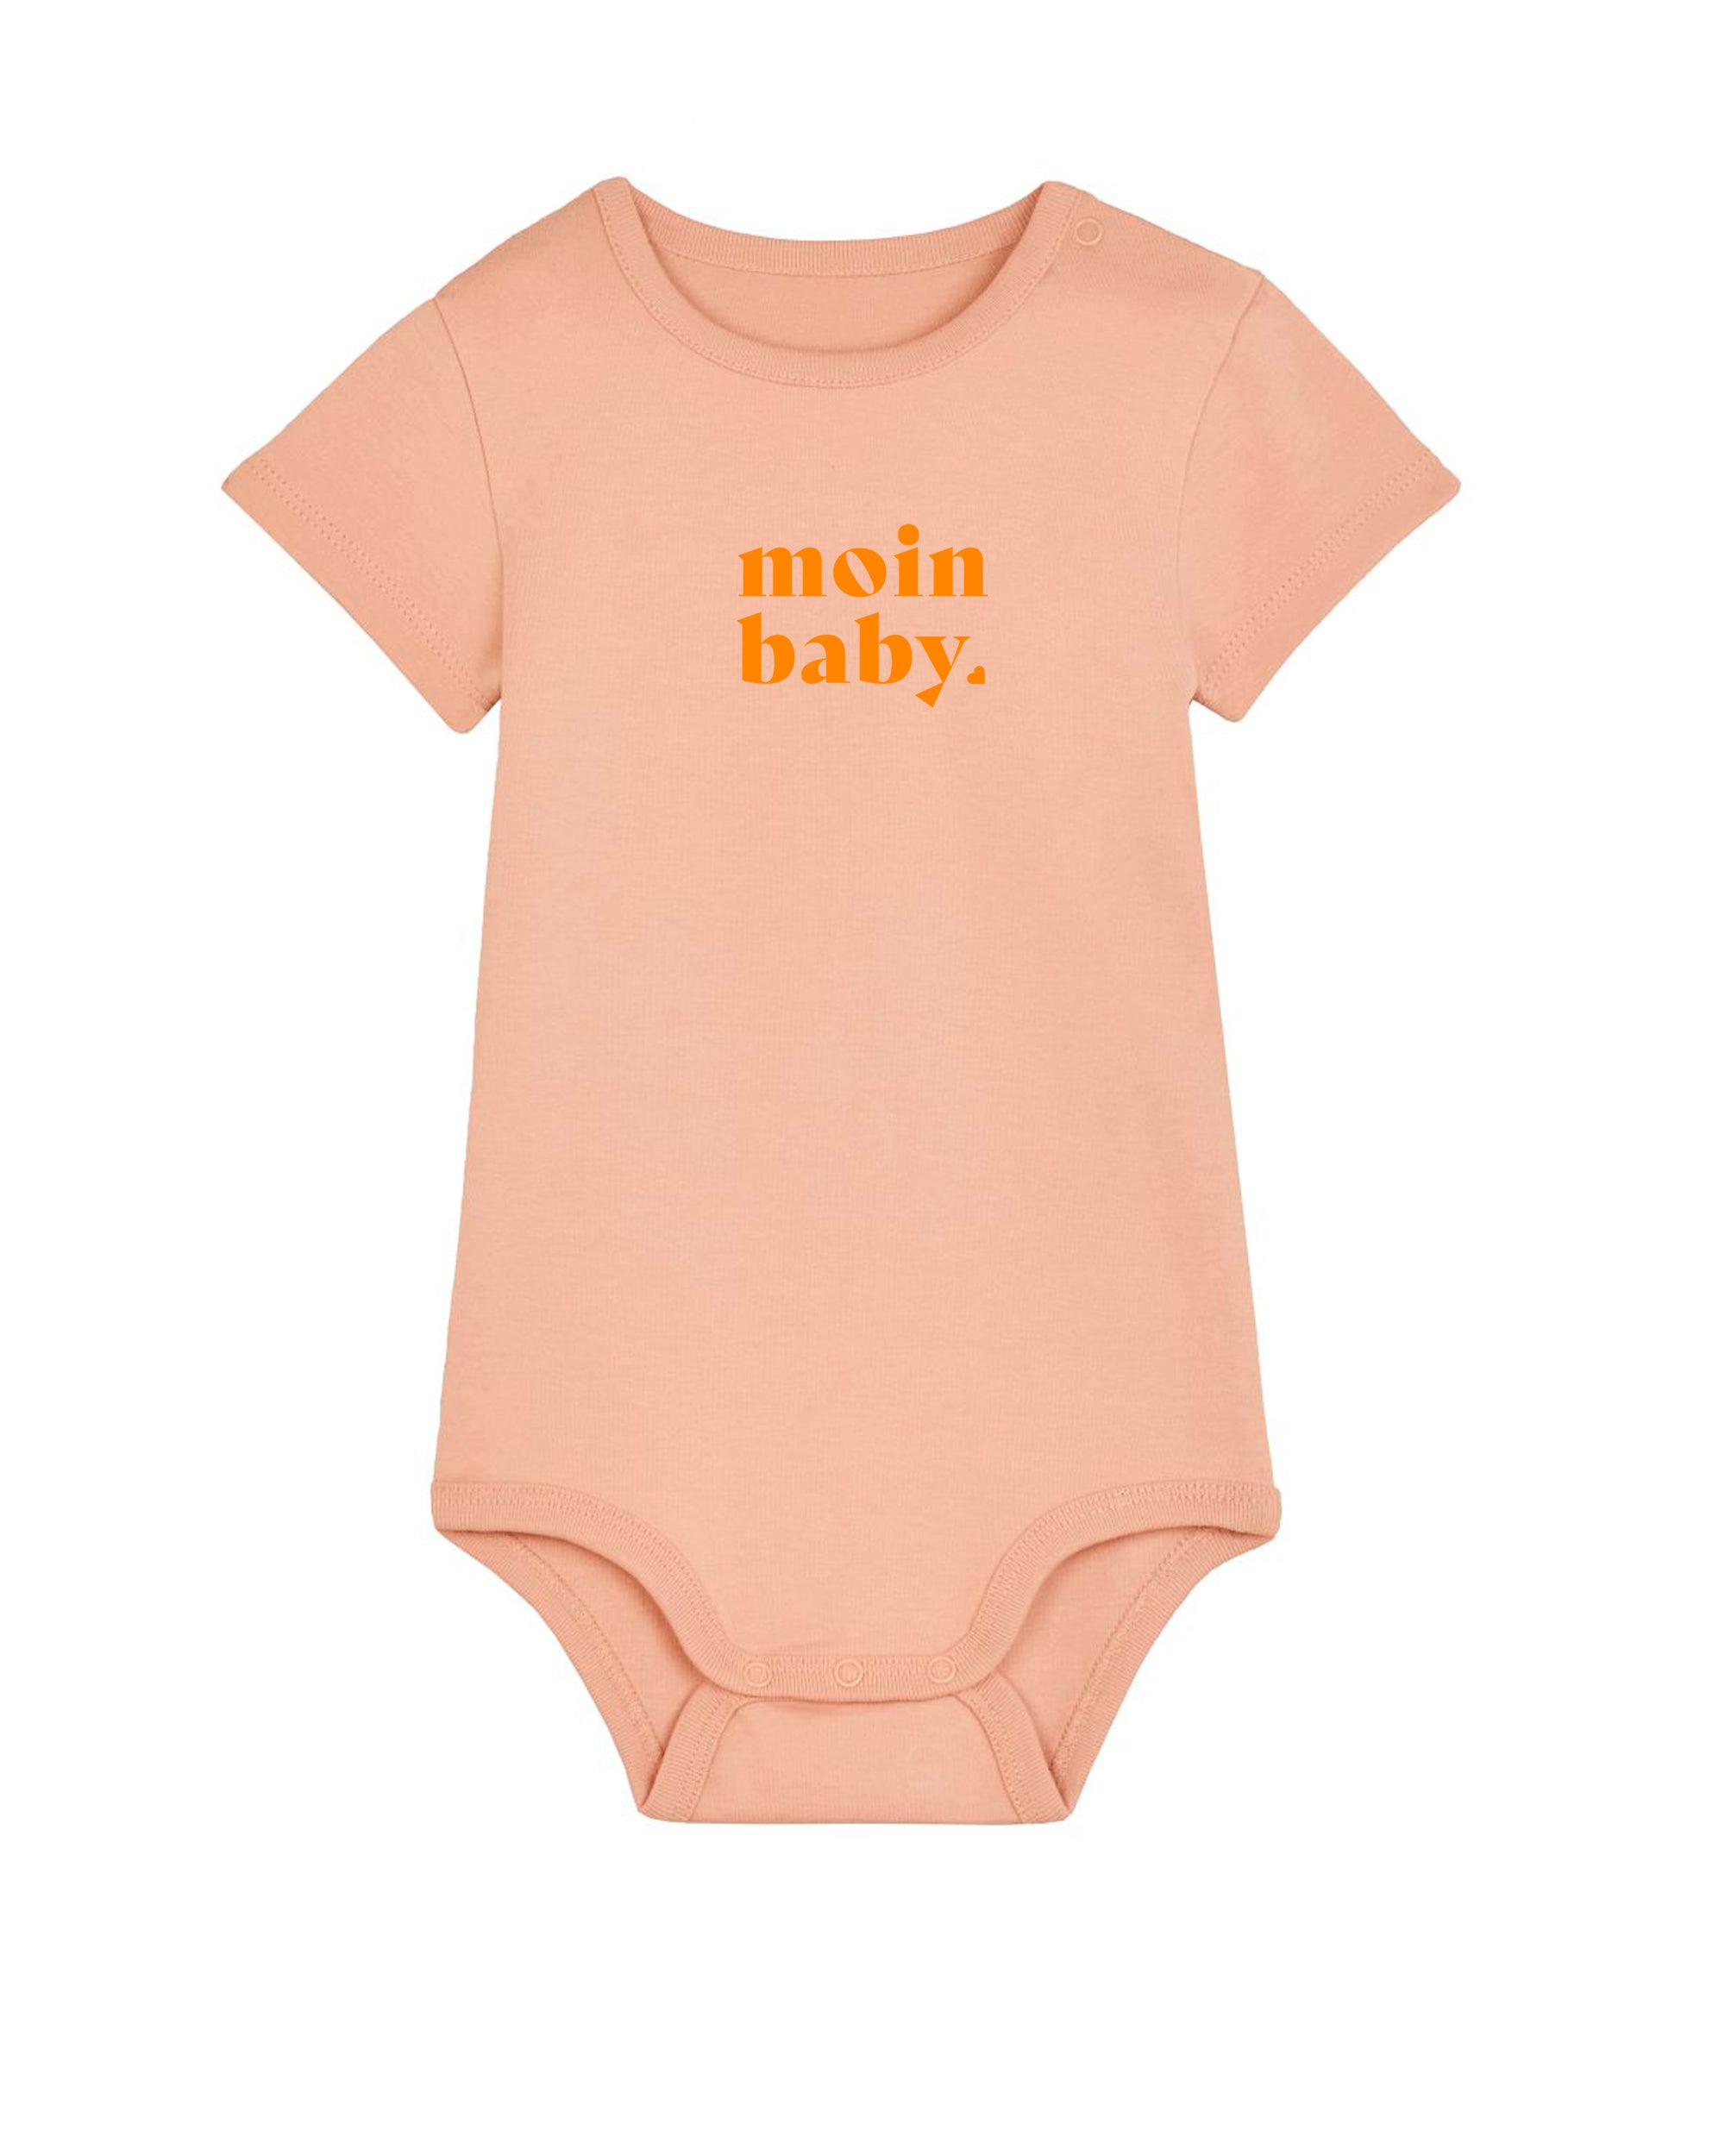 Baby Body "Moin Baby" Peach/Orange